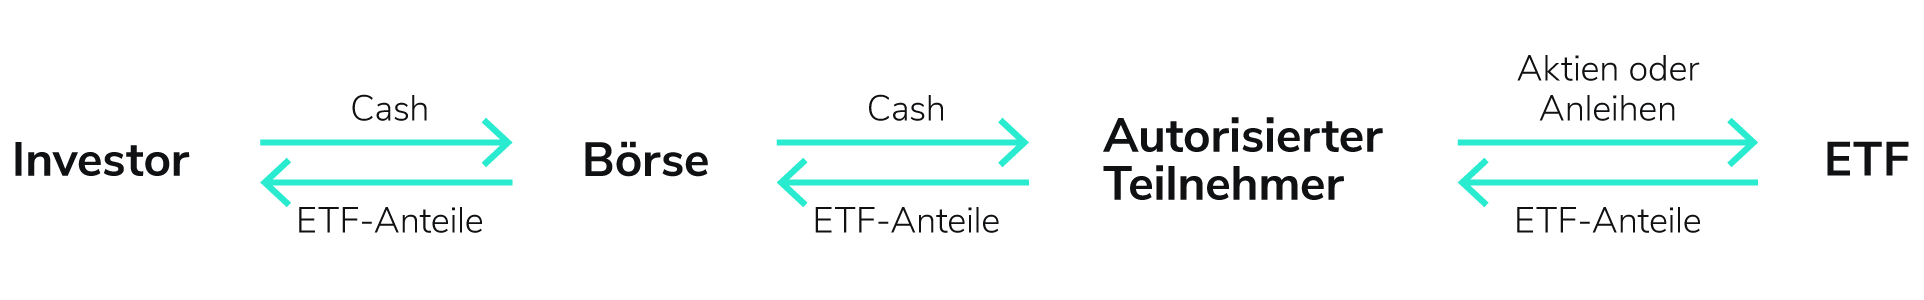 Asset Blog ETF Liquidität ETF